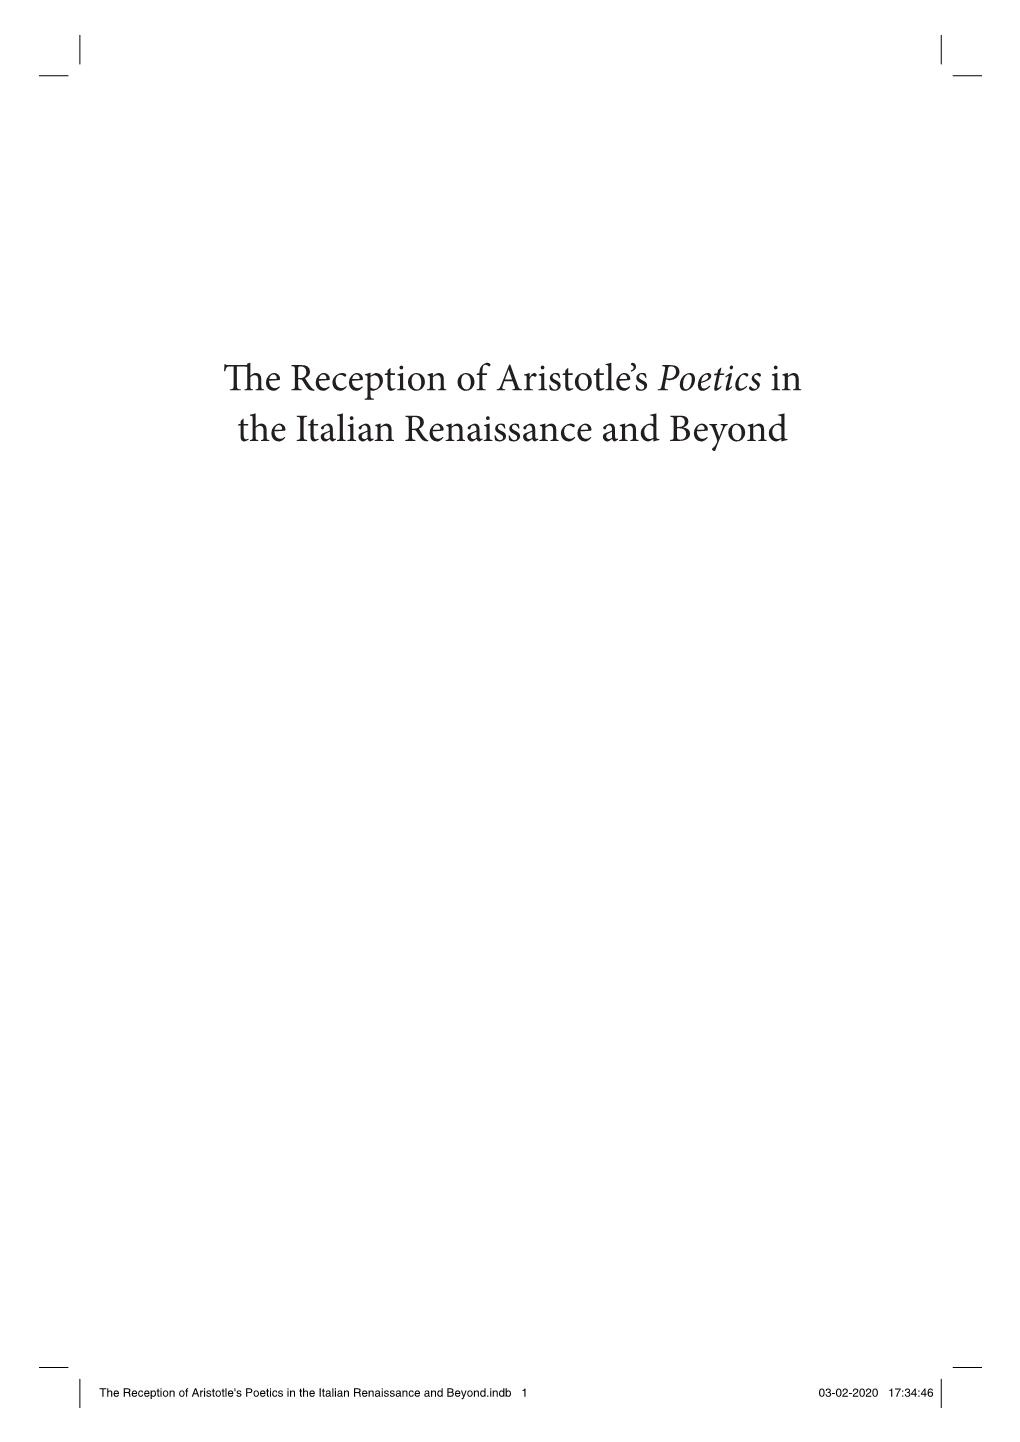 Te Reception of Aristotle's Poetics in the Italian Renaissance and Beyond